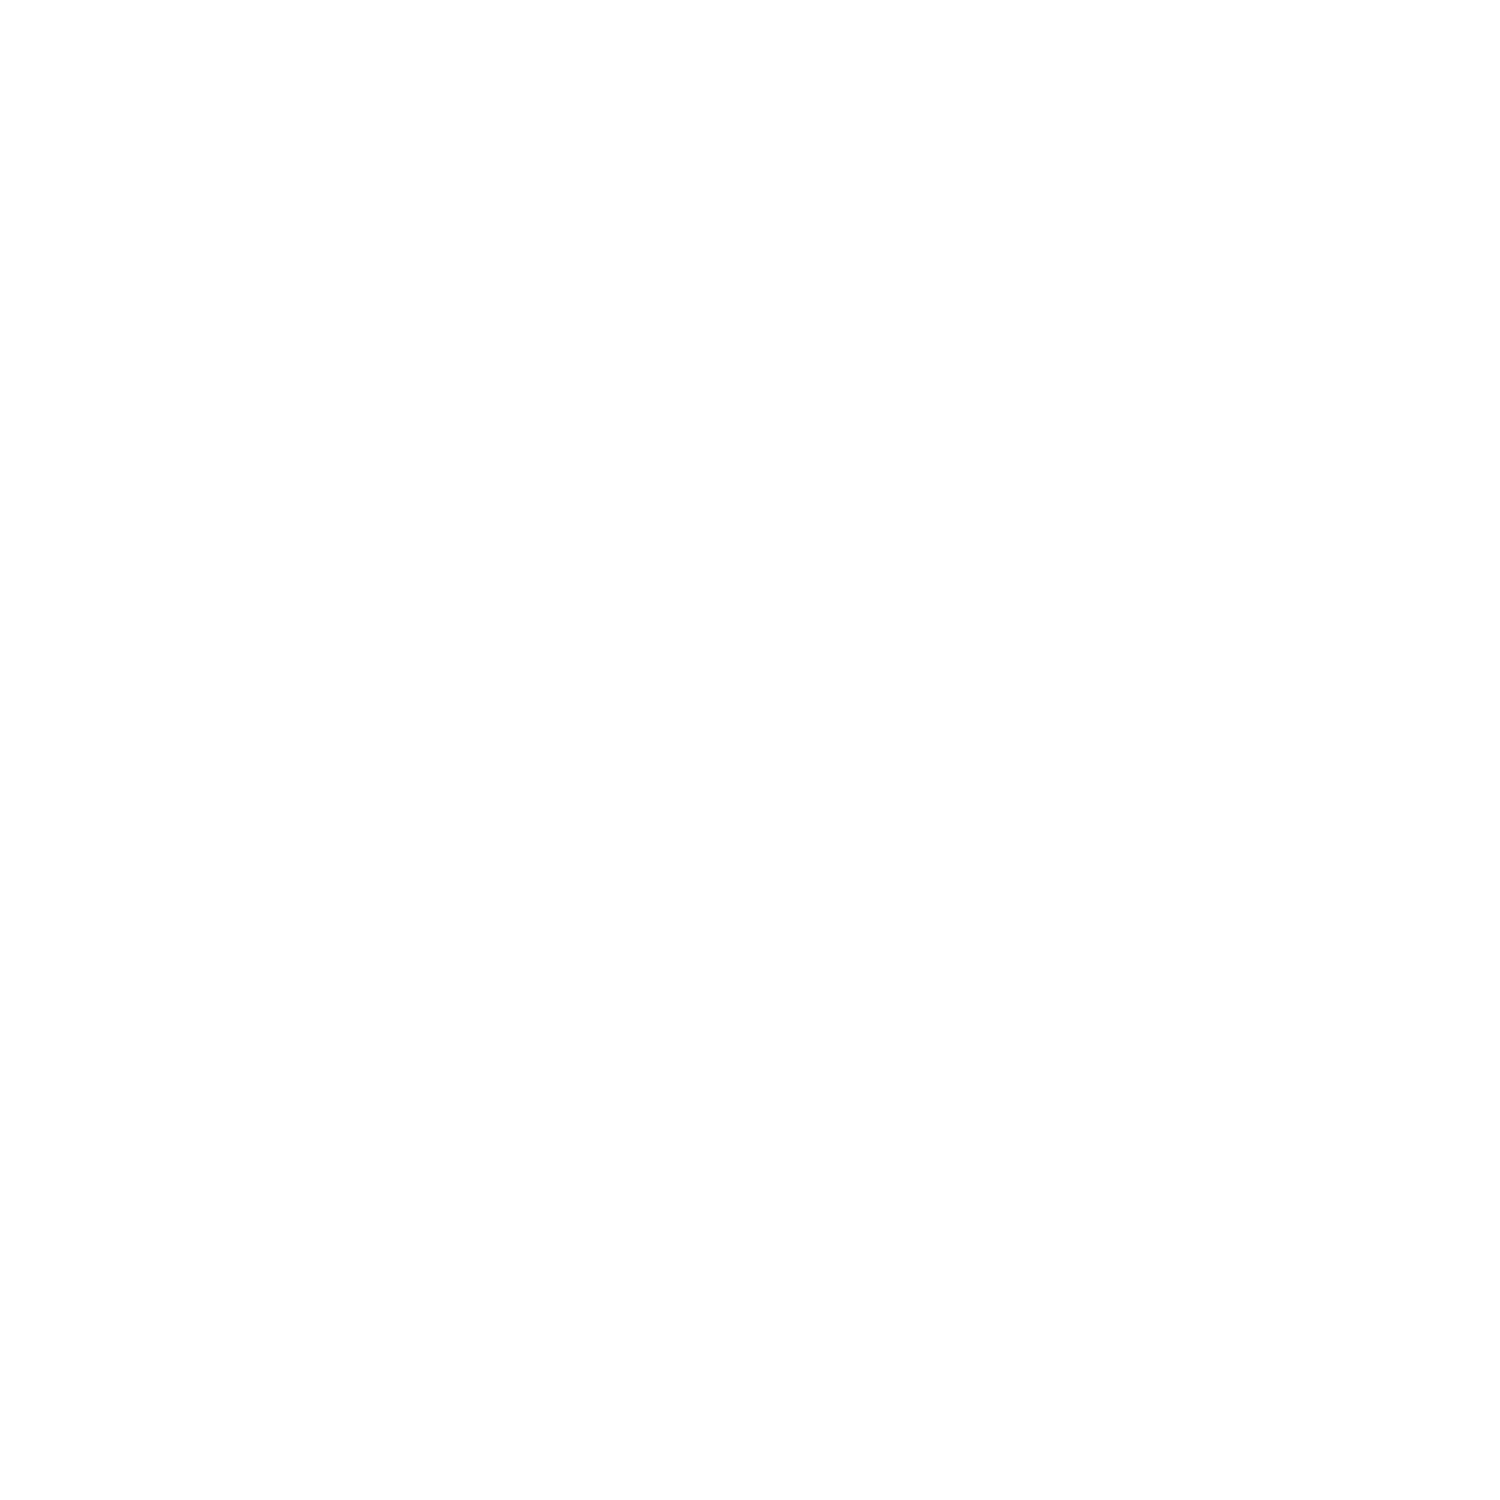 Paper Anvil 